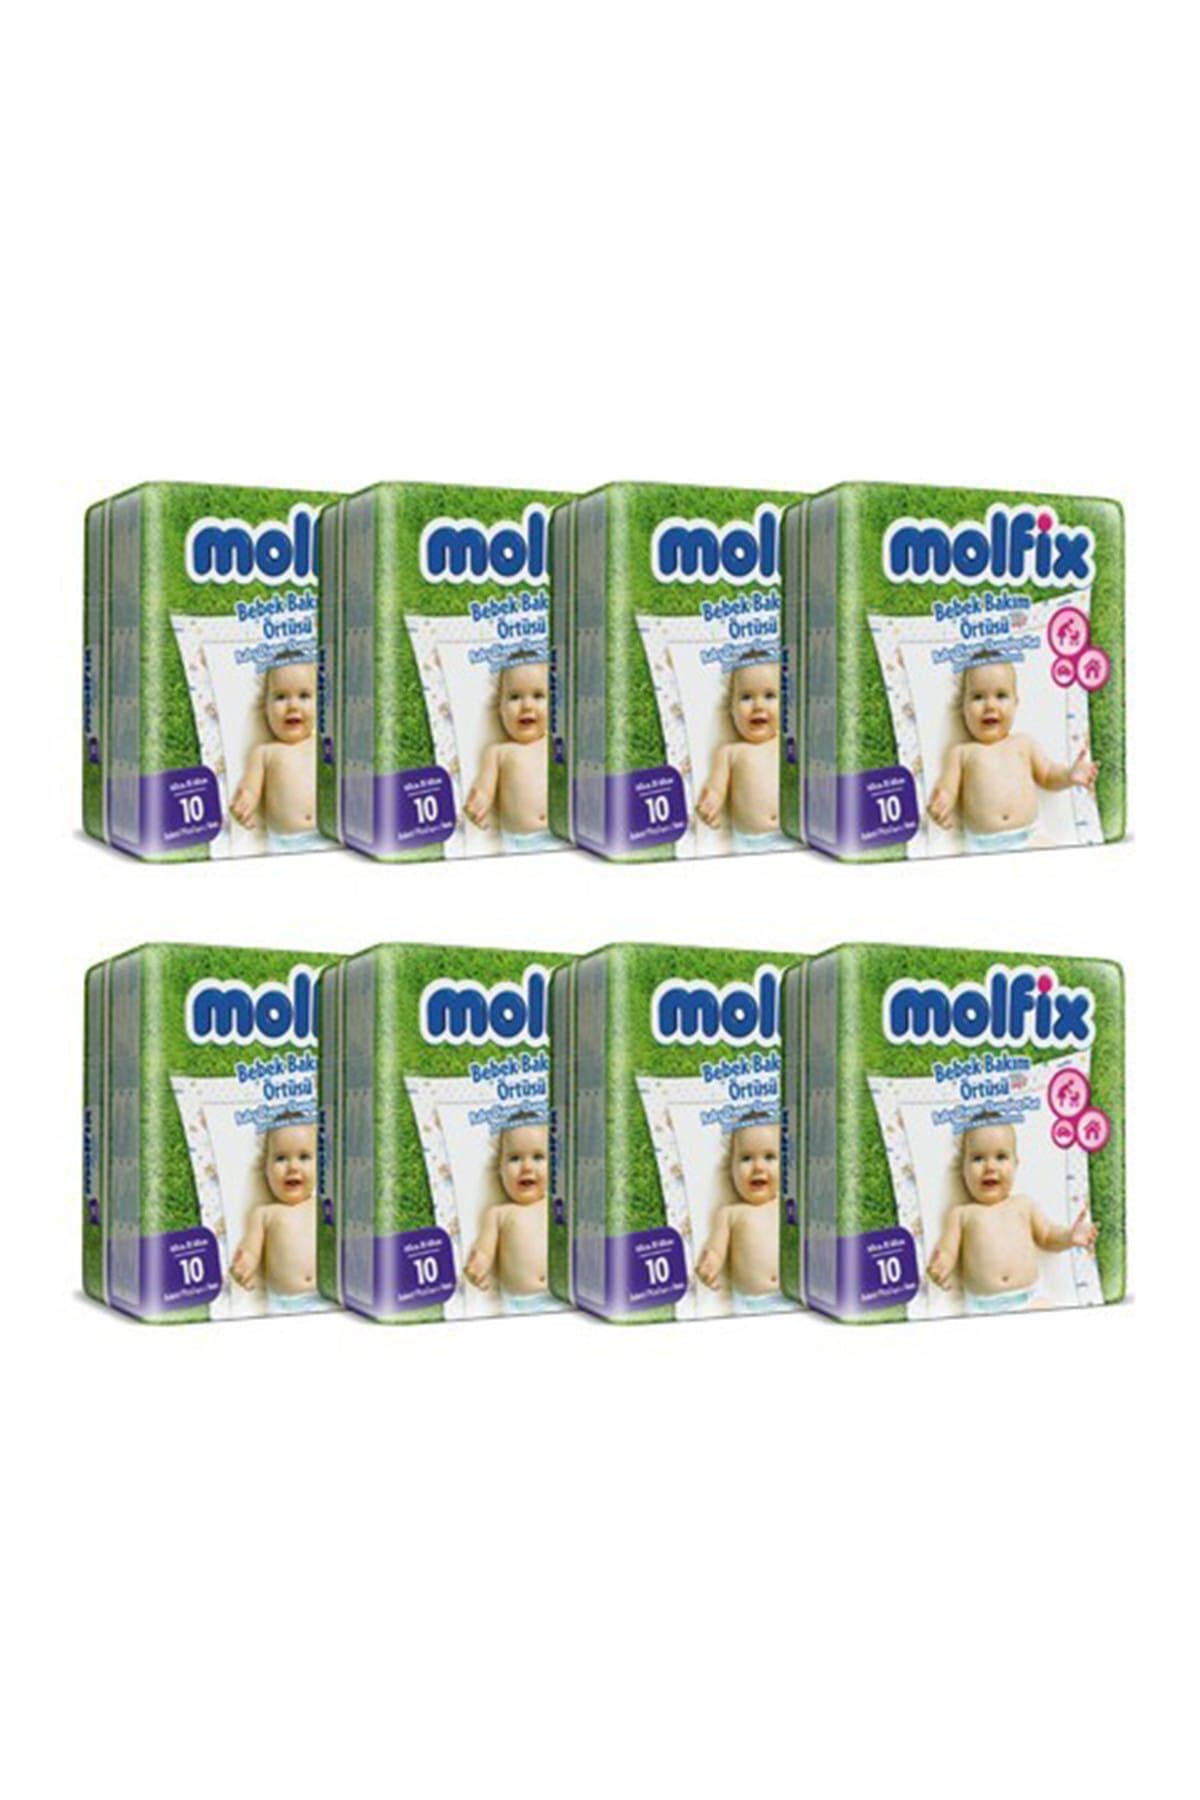 Molfix Bebek Bakım Örtüsü 10'Lu 8 Paket (80 Adet)